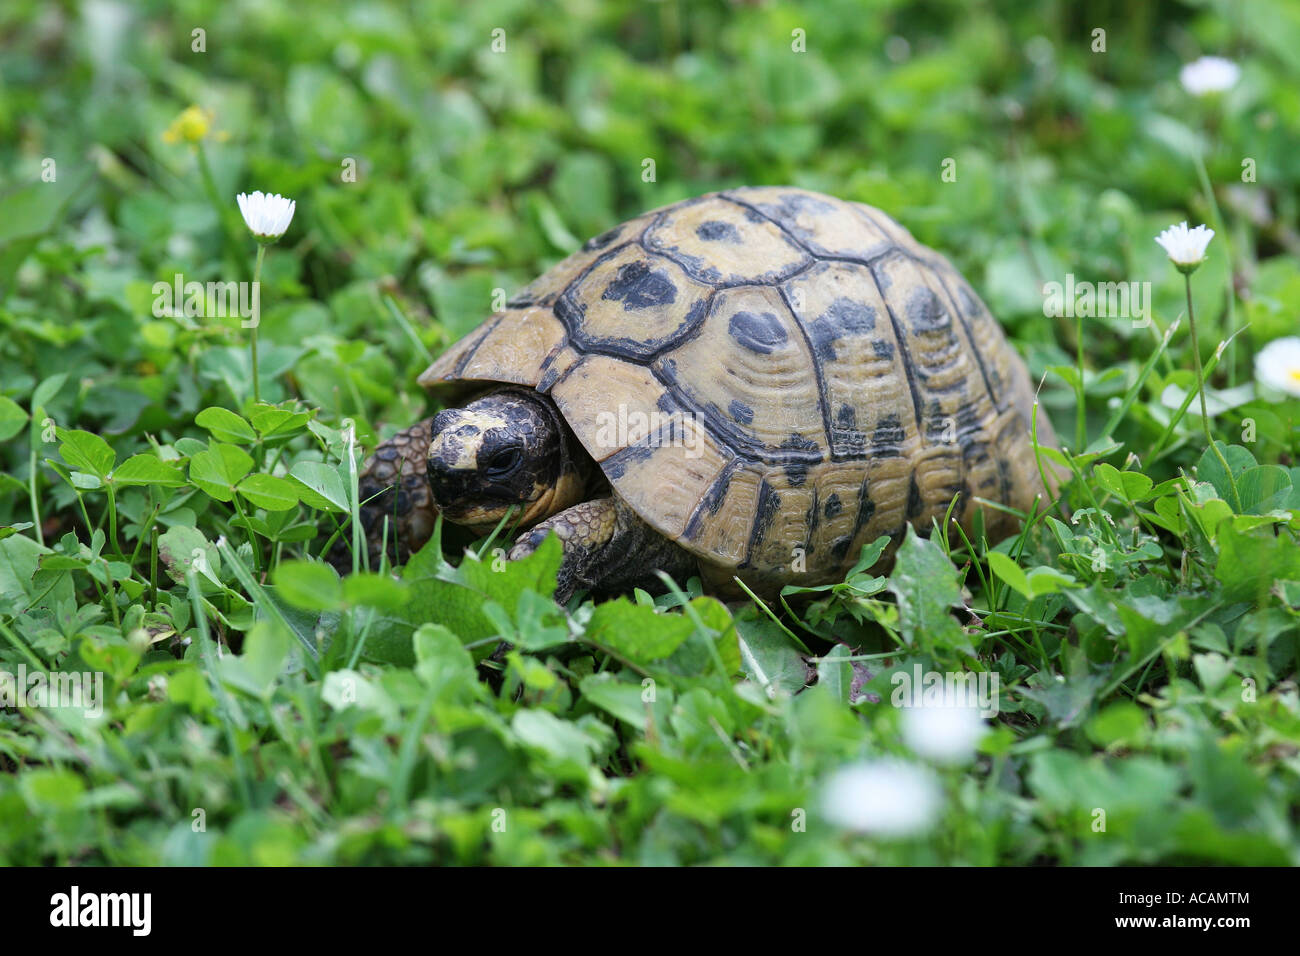 Russian Tortoise (Testudo horsfieldii) Stock Photo